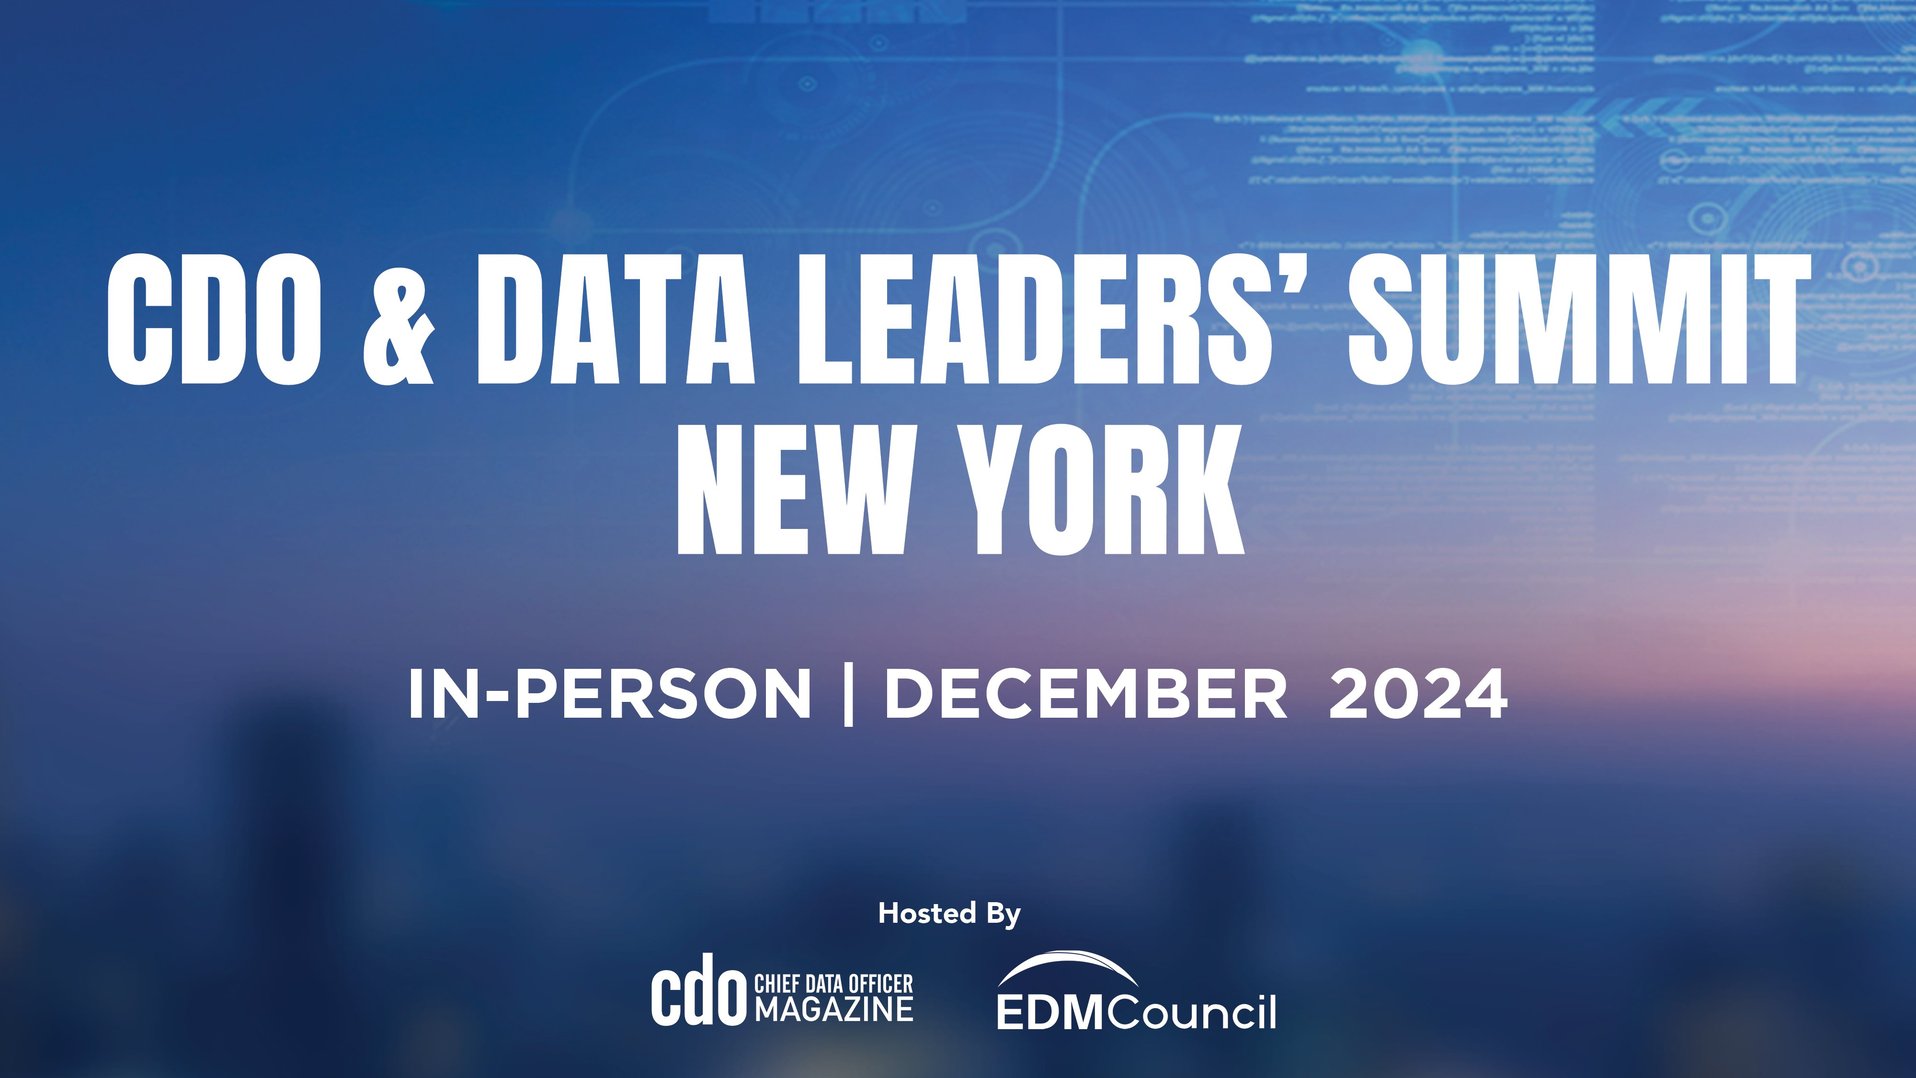 CDO Data Leaders Summit New York 2024